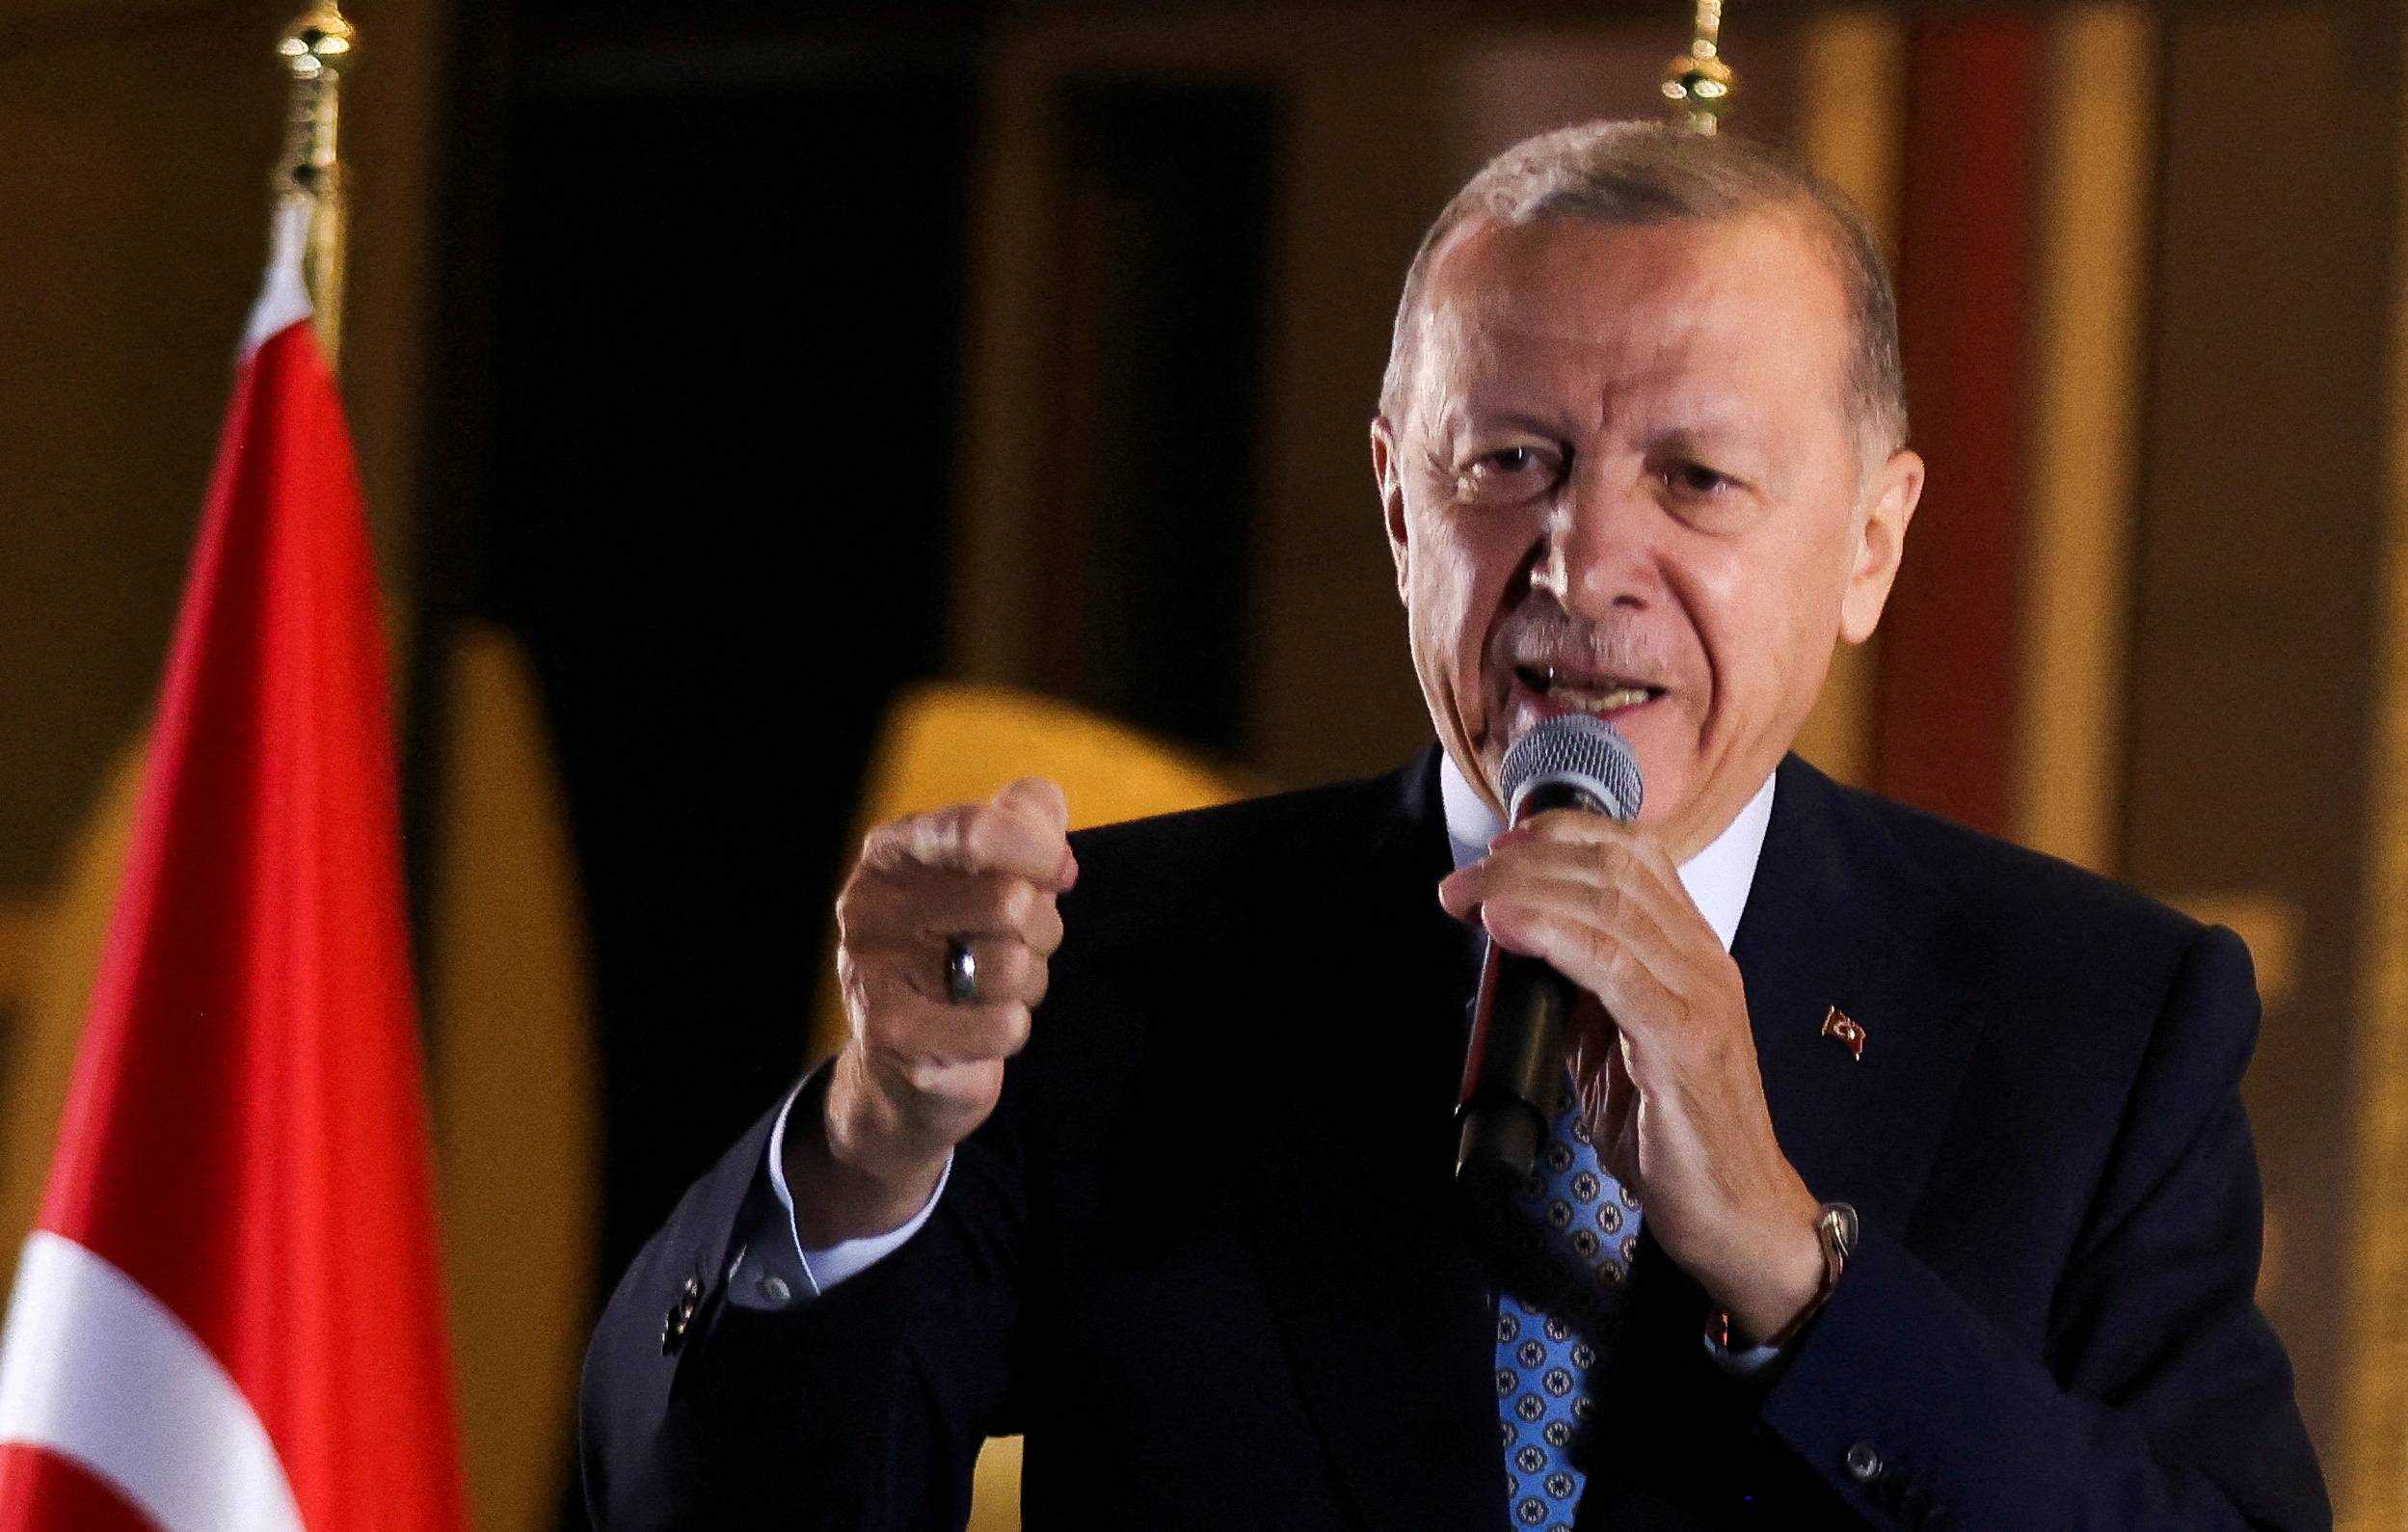 Erdogan intrare cu talpa la Casa Alba: "Dați-mi F16!"